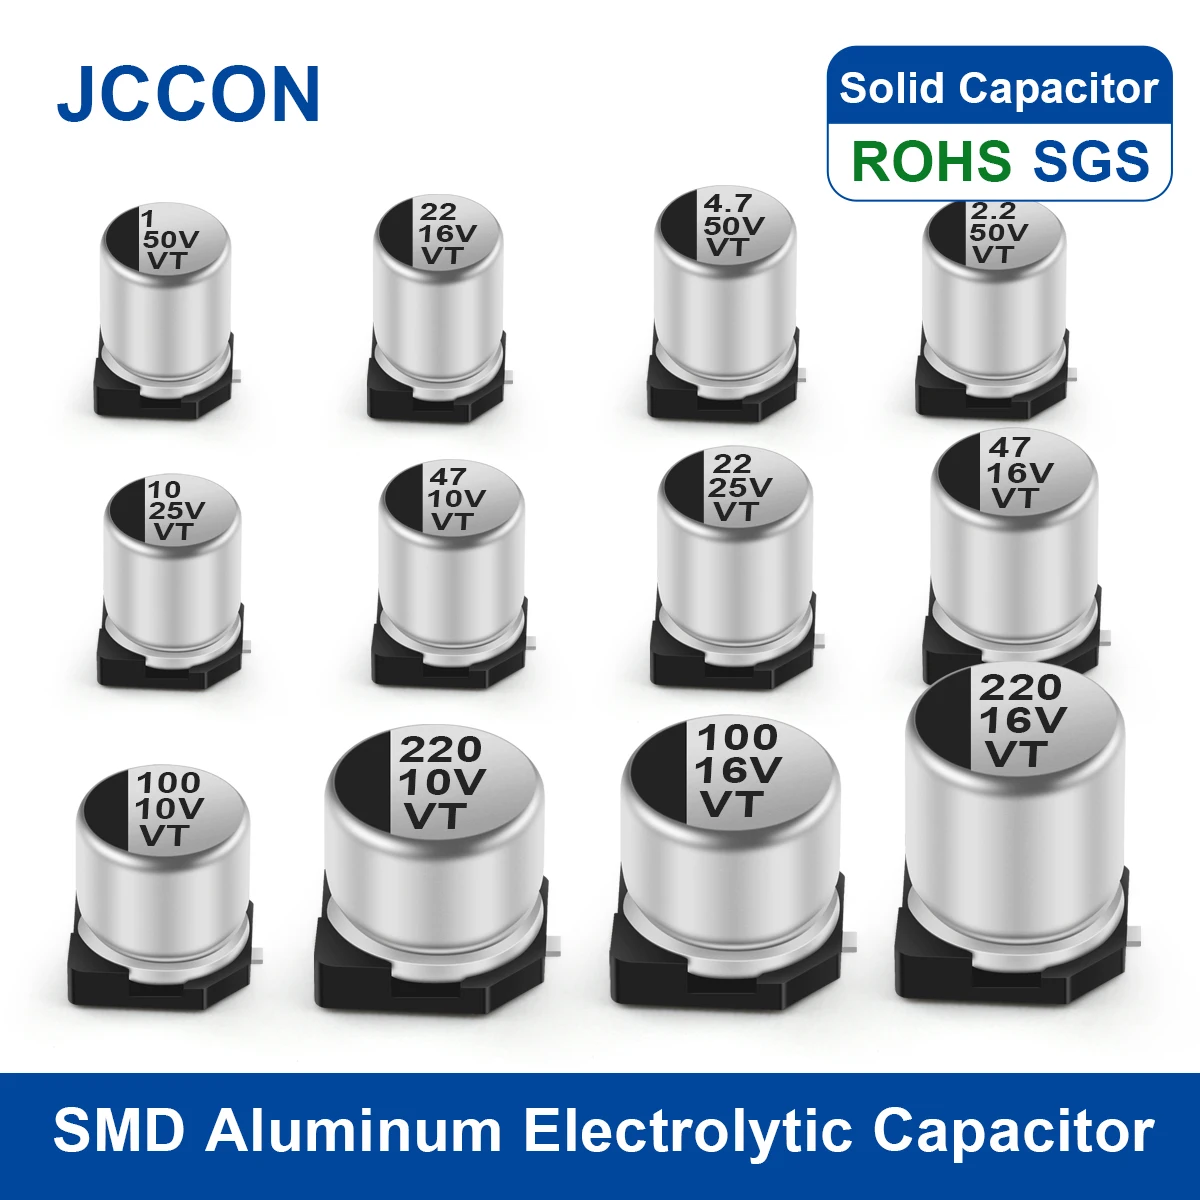 

50Pcs JCCON SMD Aluminum Electrolytic Capacitor 6.3V 10V 16V 25V 35V 50V 100V 0.47UF 1UF 10UF 22UF 68UF 100UF 220UF 470UF 1000UF